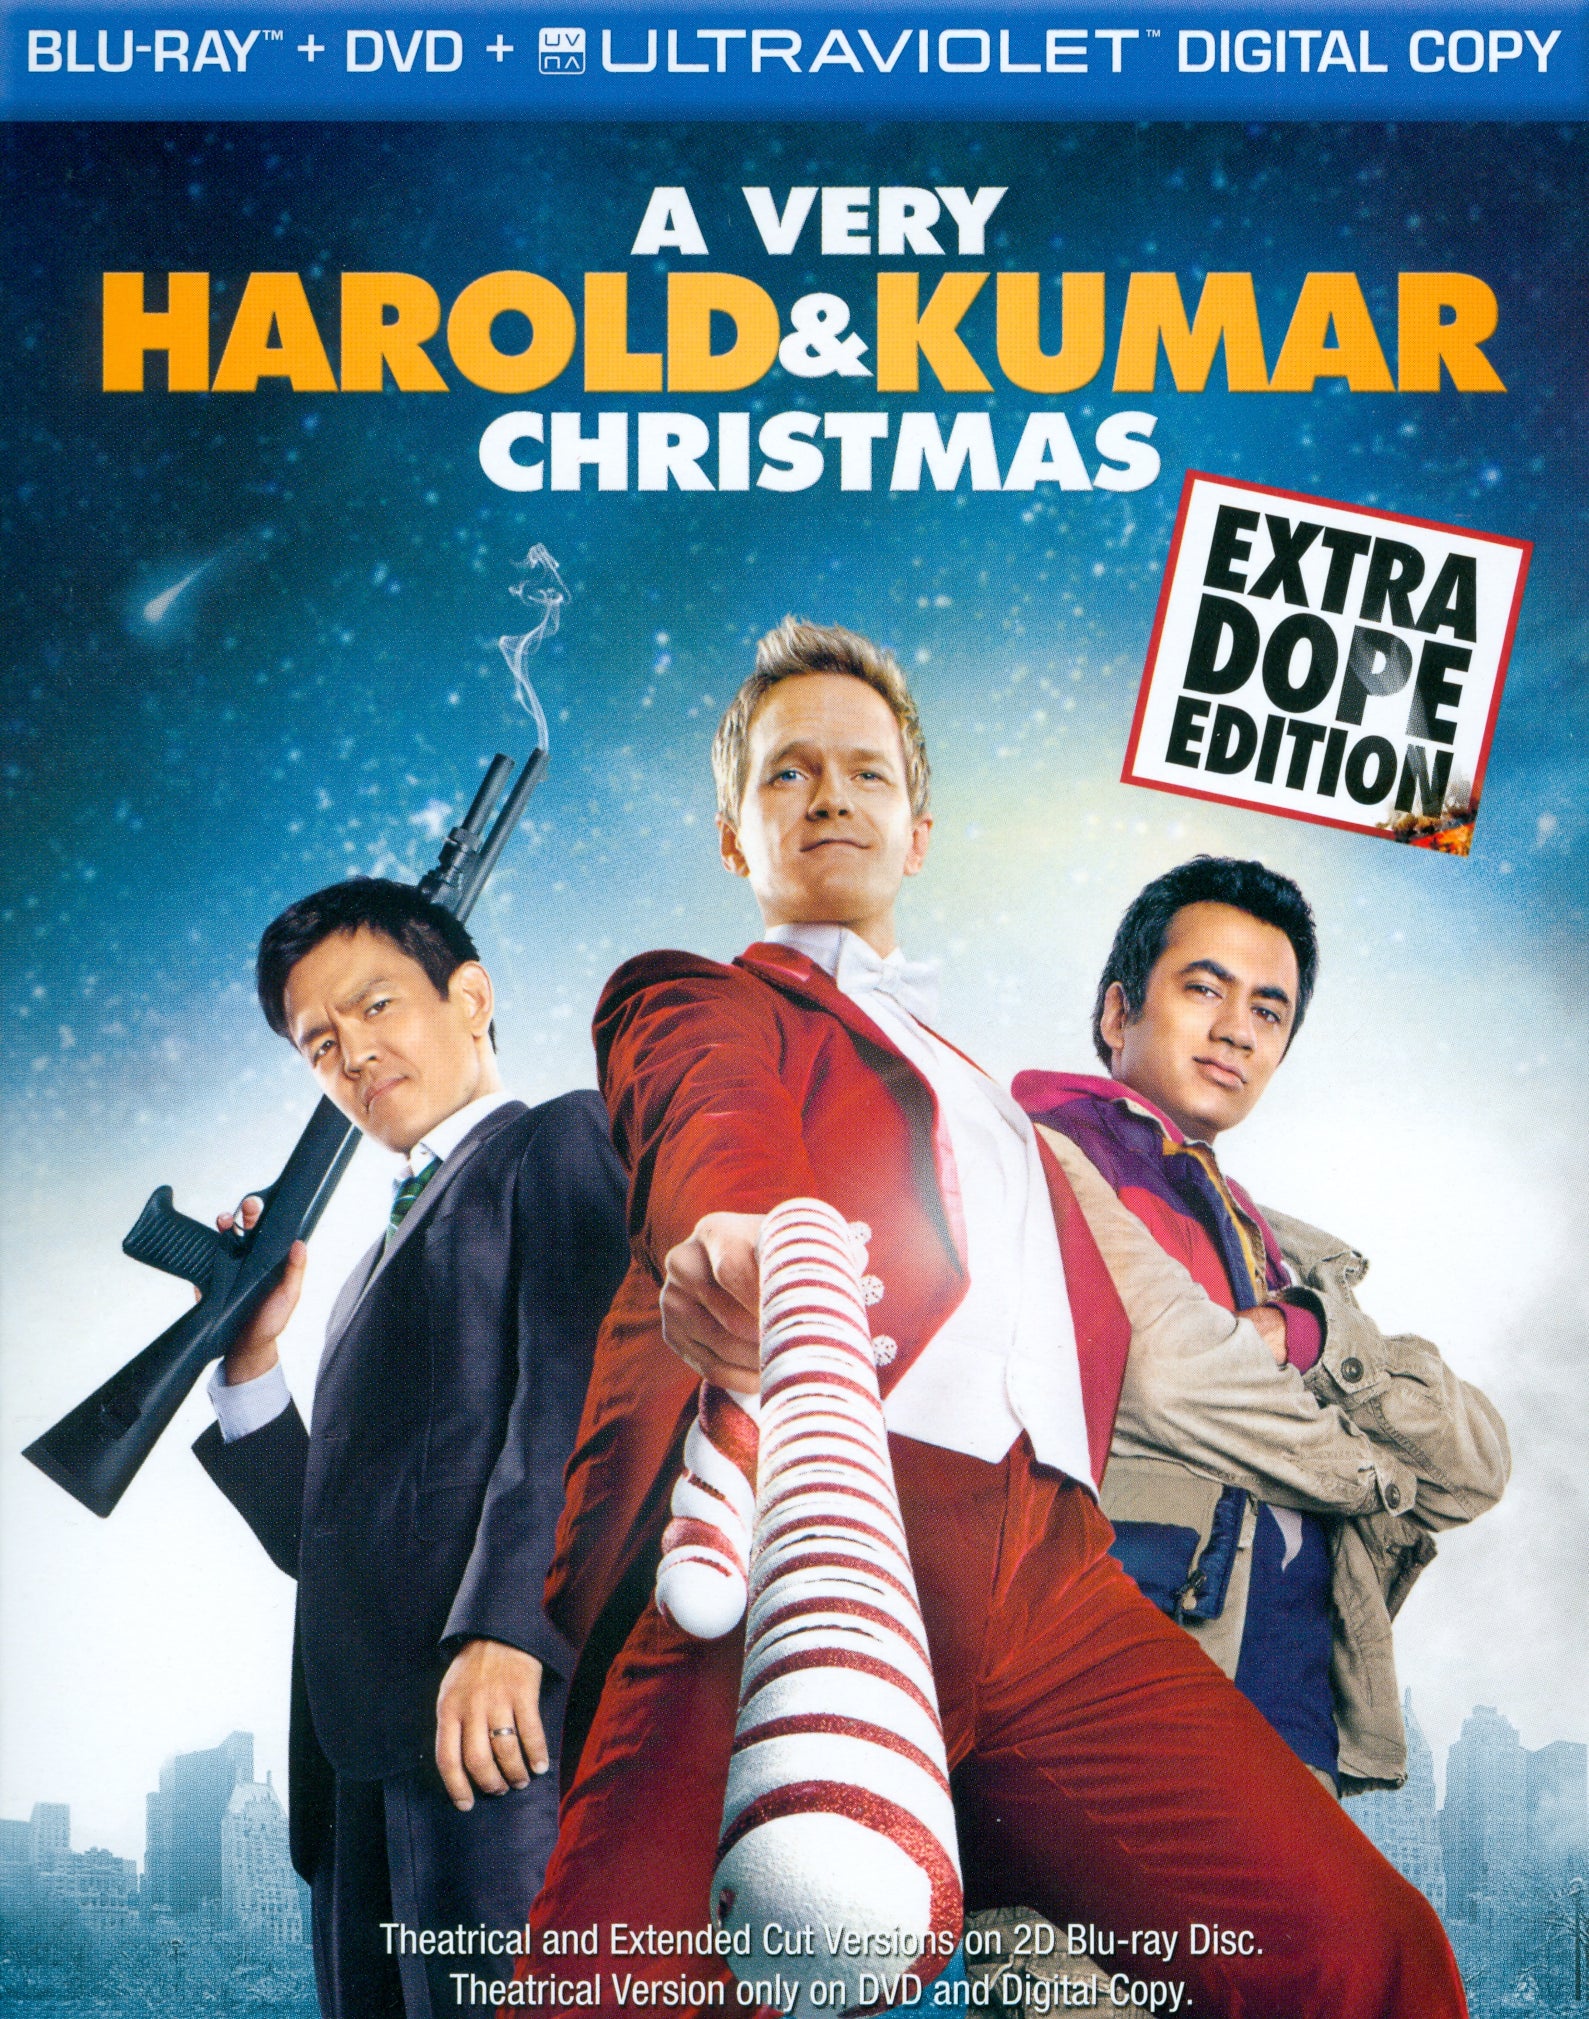 Very Harold & Kumar Christmas [Extended] [Includes Digital Copy] [Blu-ray/DVD] cover art